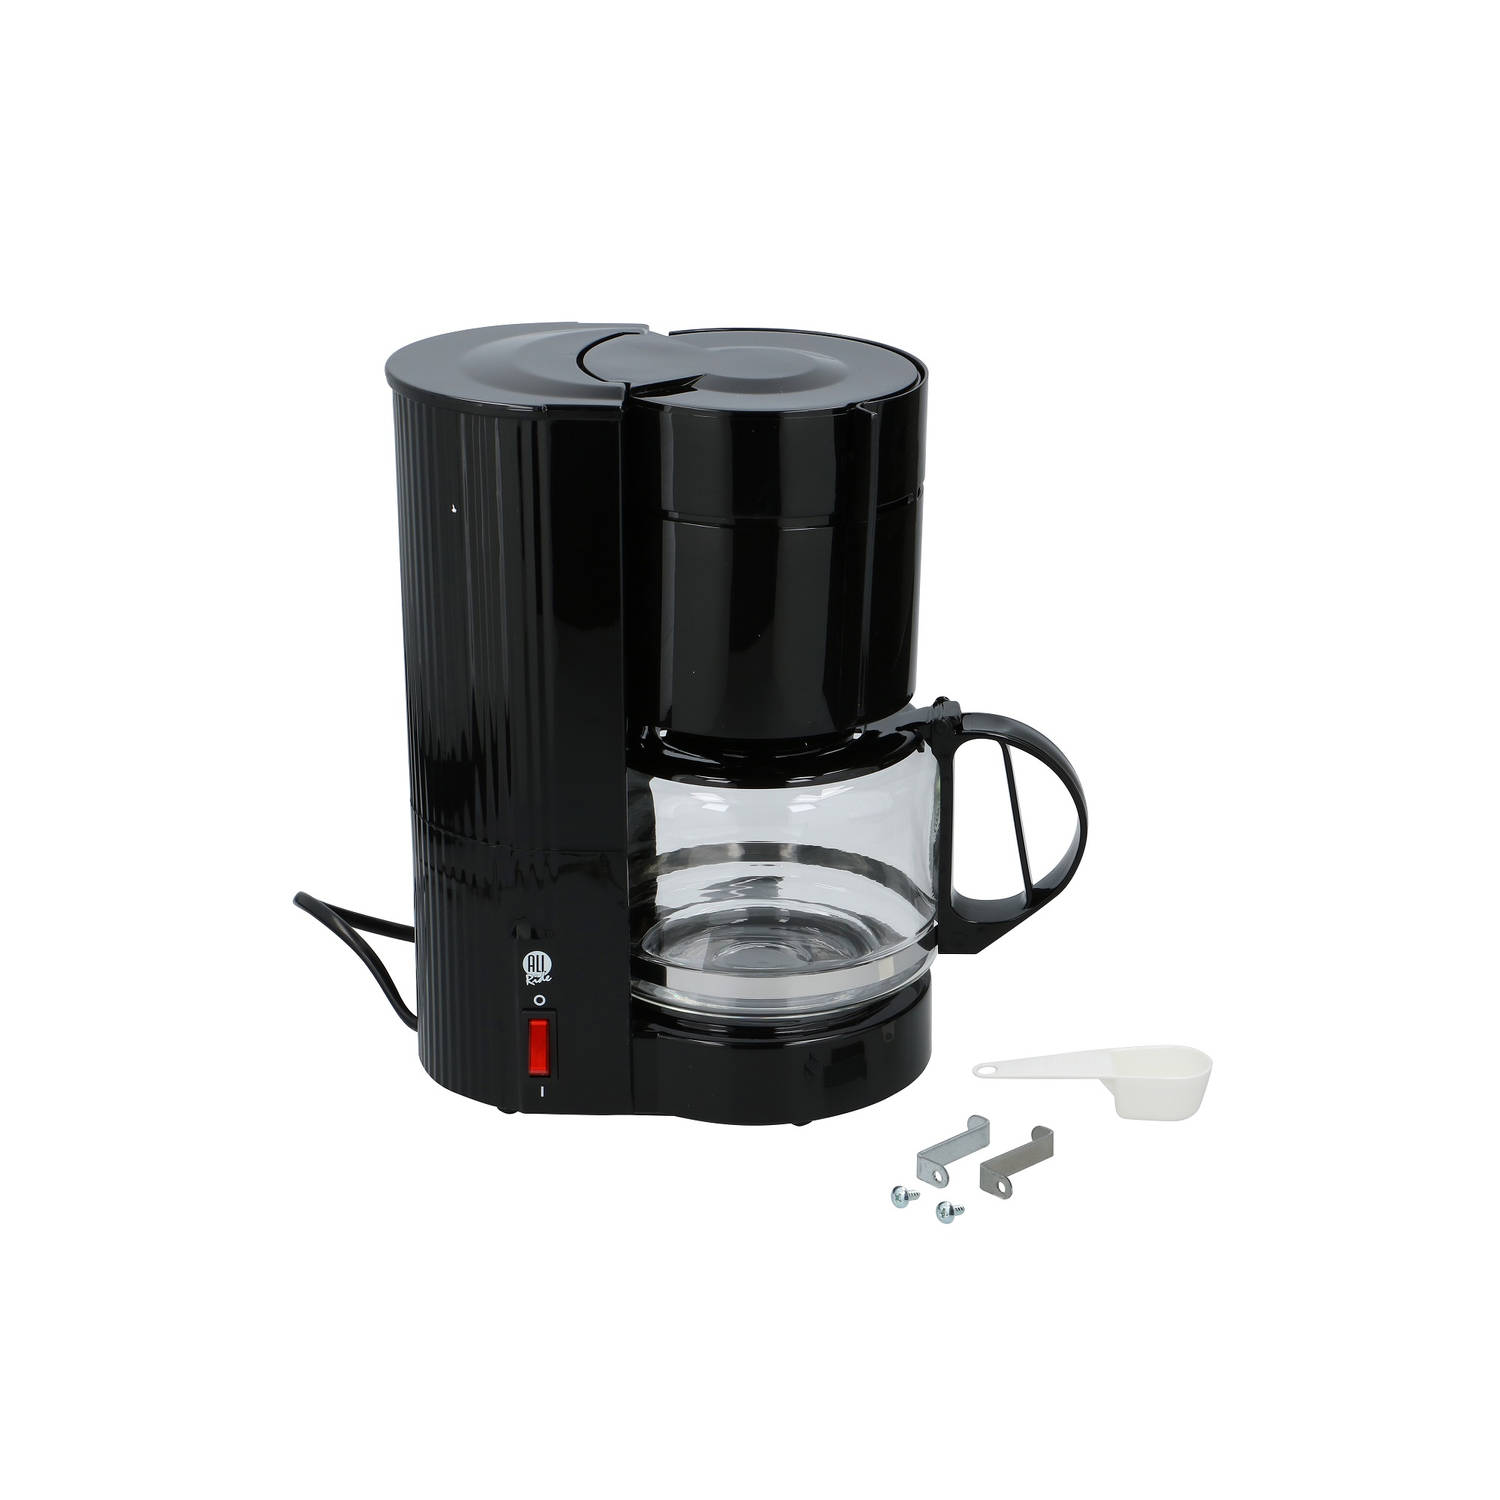 campus bom belofte All Ride Reis Koffiezetapparaat - 24 Volt - 1 Liter - Filterkoffie - Zwart  | Blokker